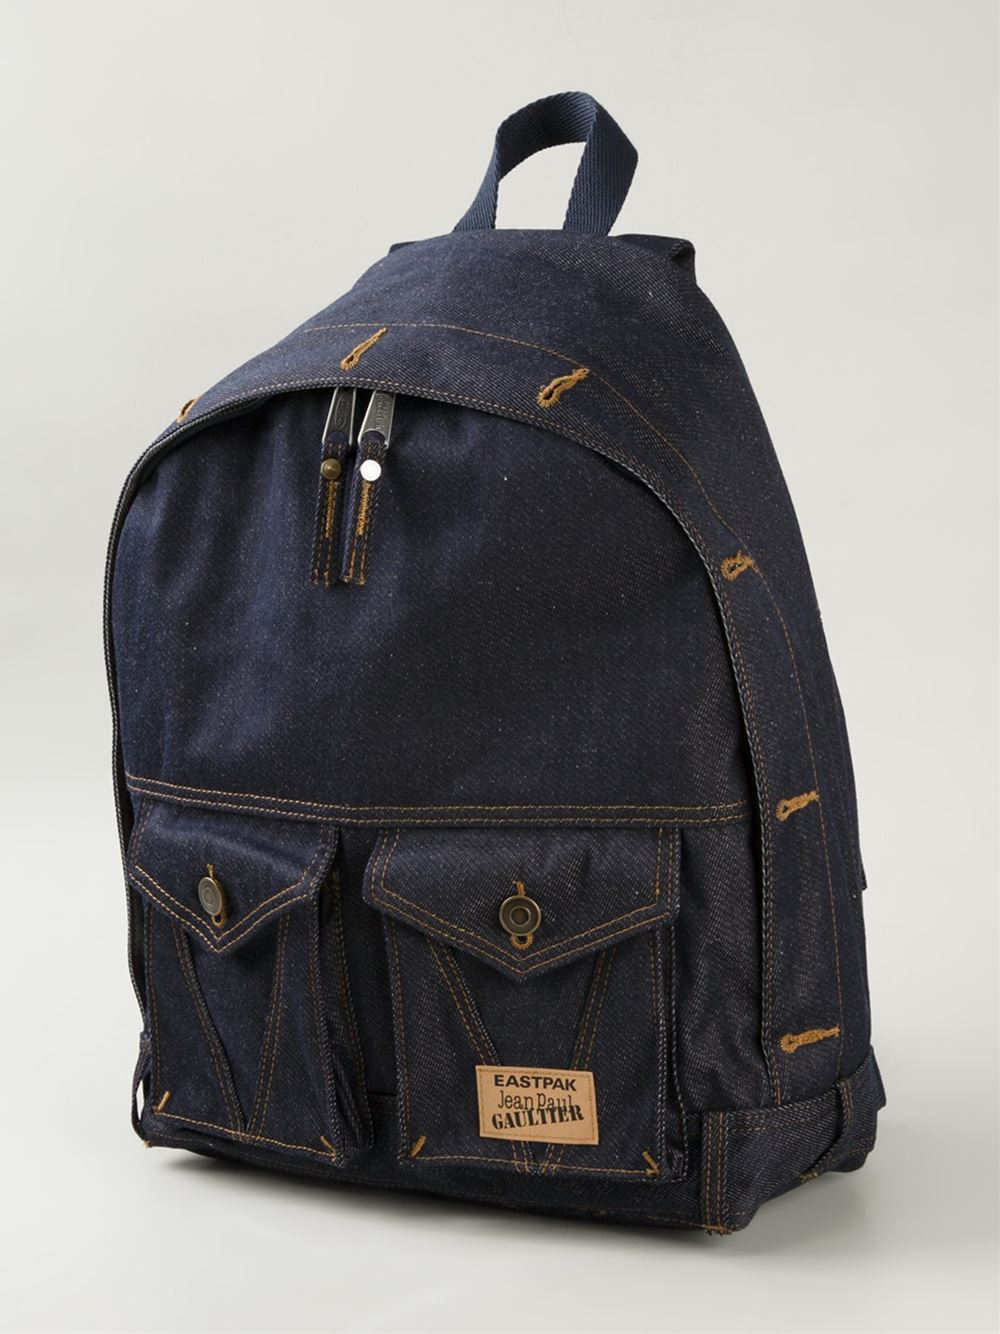 Eastpak Eastpack X Jean Paul Gaultier 'Jeans' Backpack in Blue for 